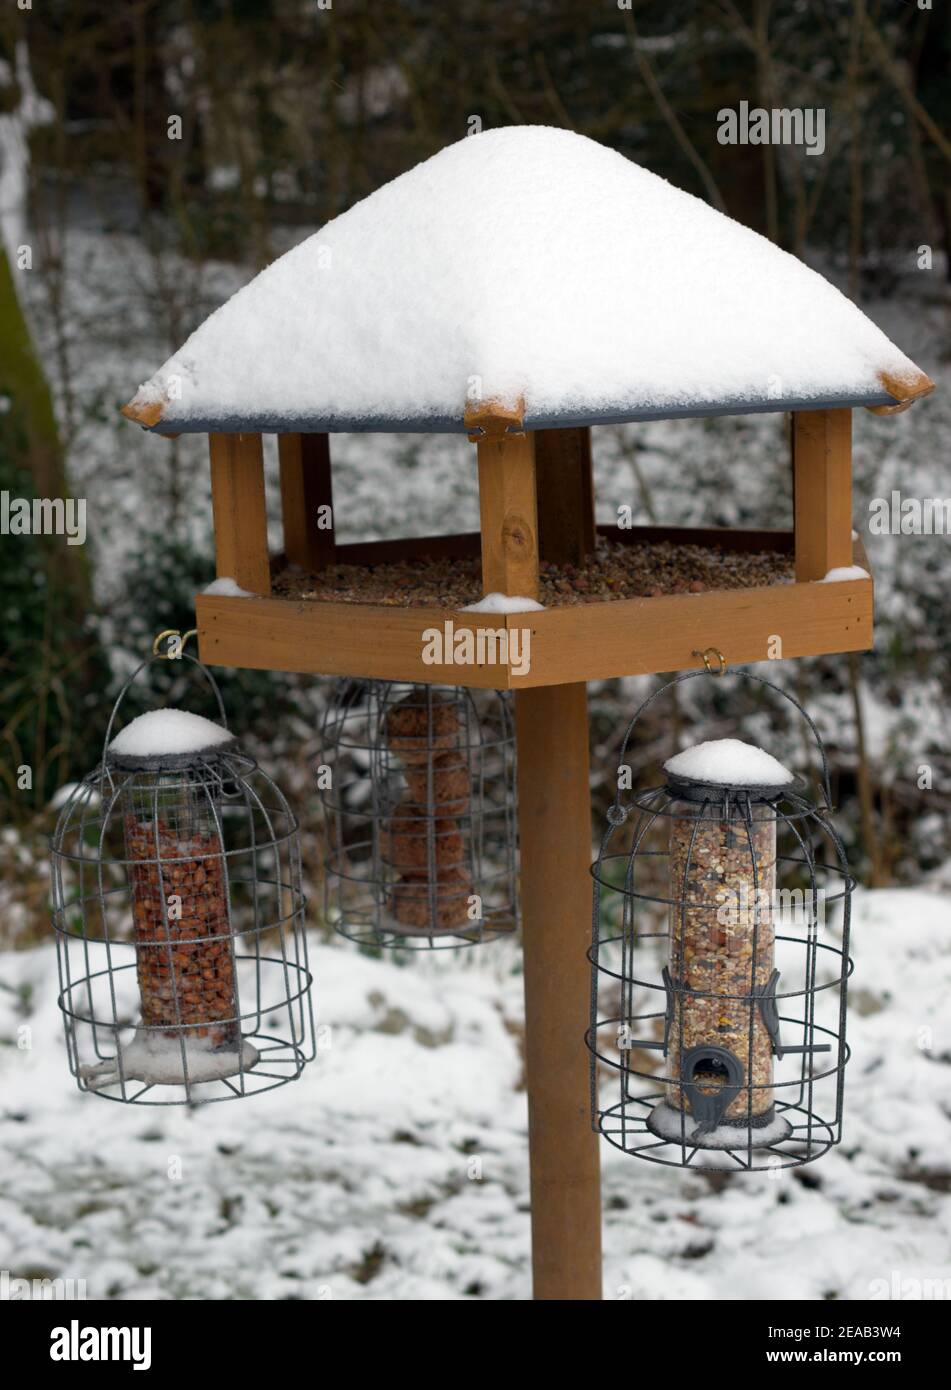 A bird feeding station with bird feeders for wild garden birds covered in snow during winter. Stock Photo